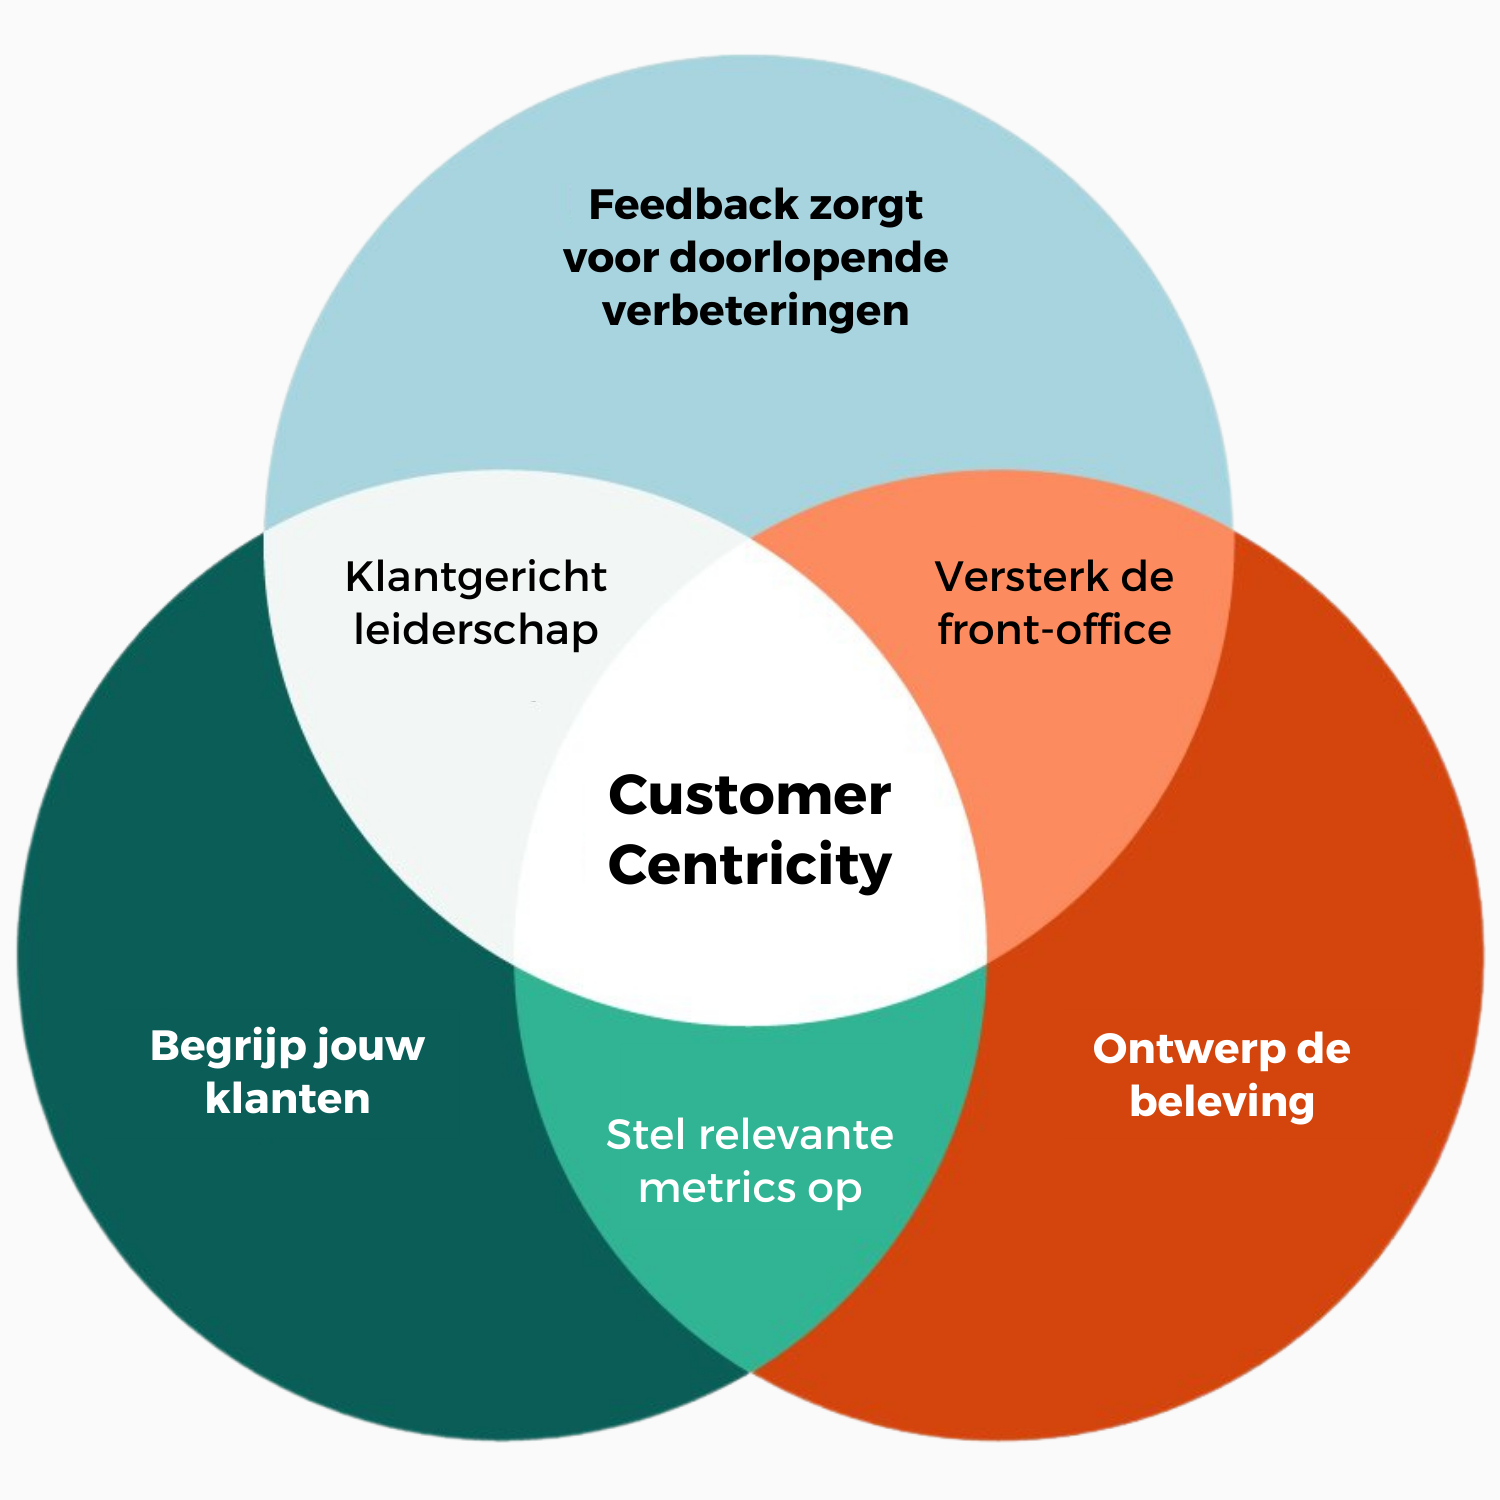 Customer centricity